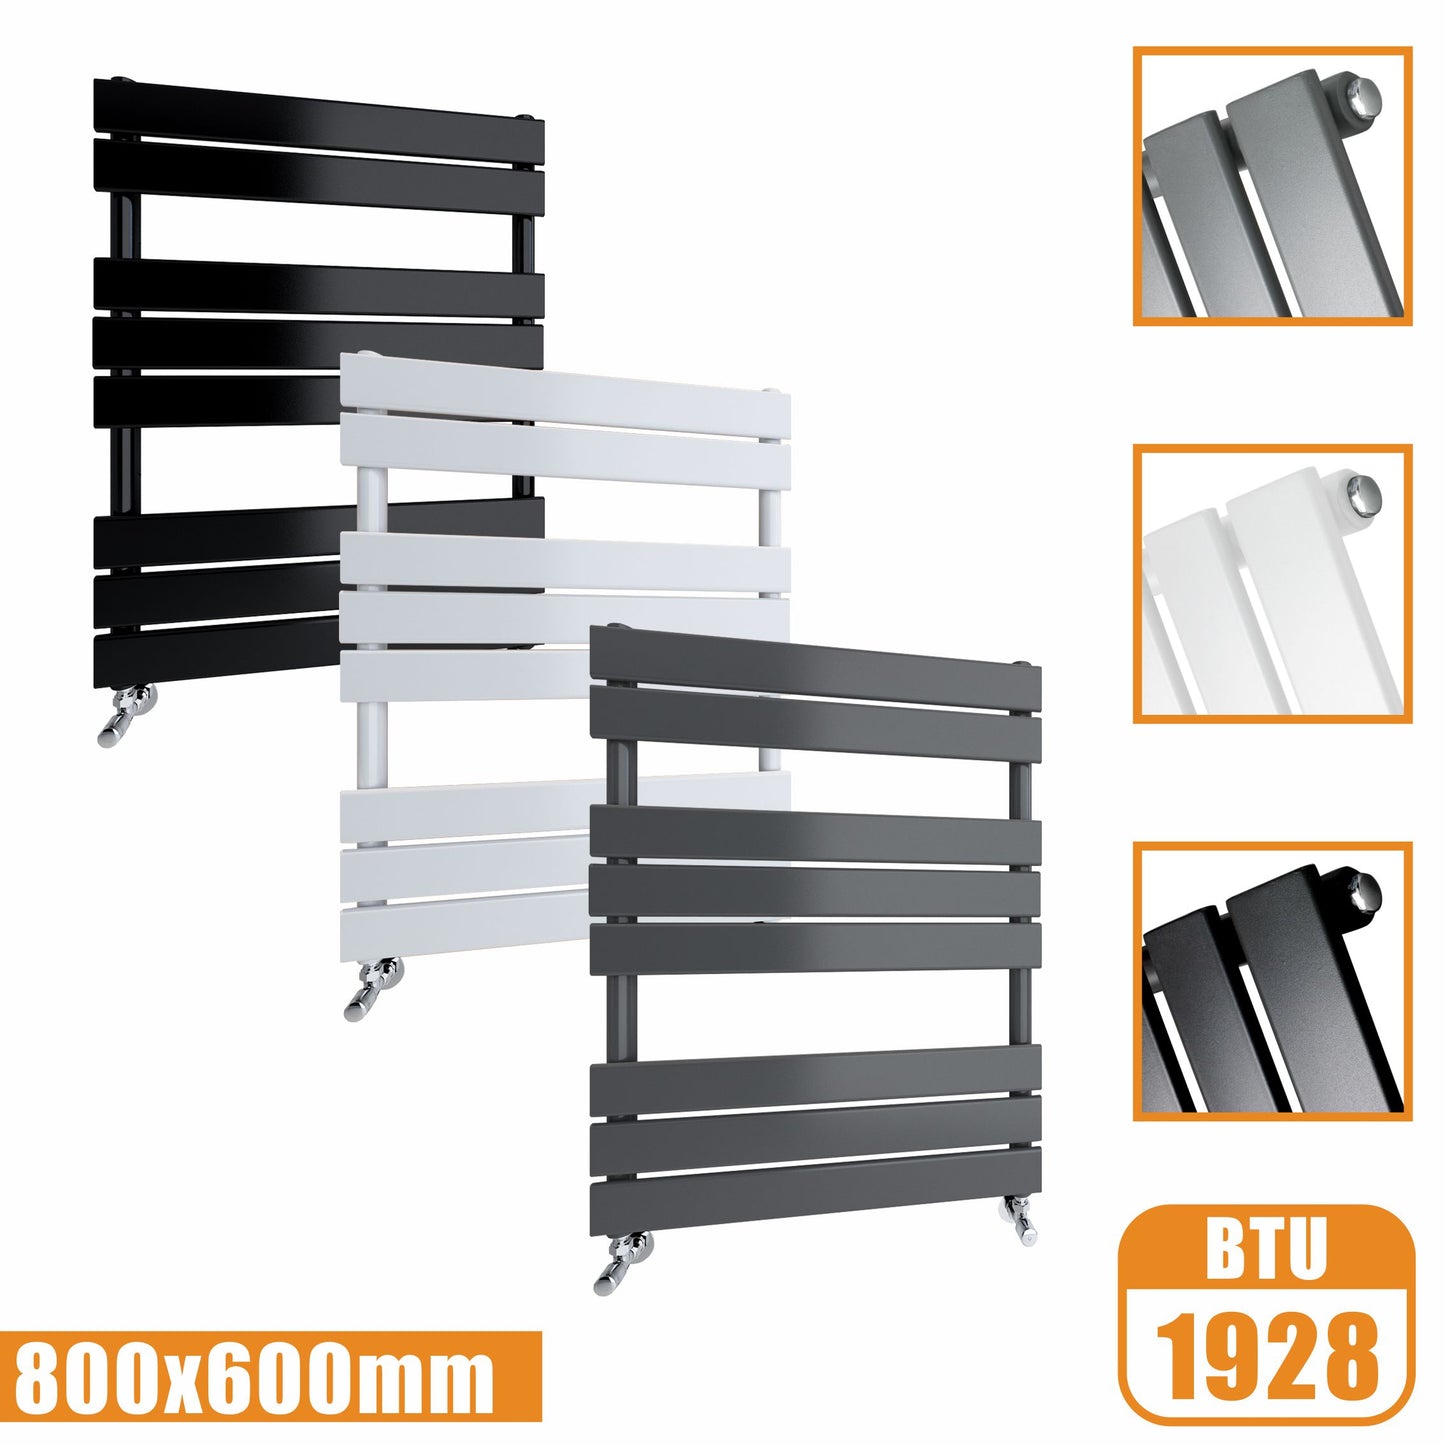 Flat Panel Heated Towel Rail ladder Radiator Anthracite White Black 800x600MM AICA